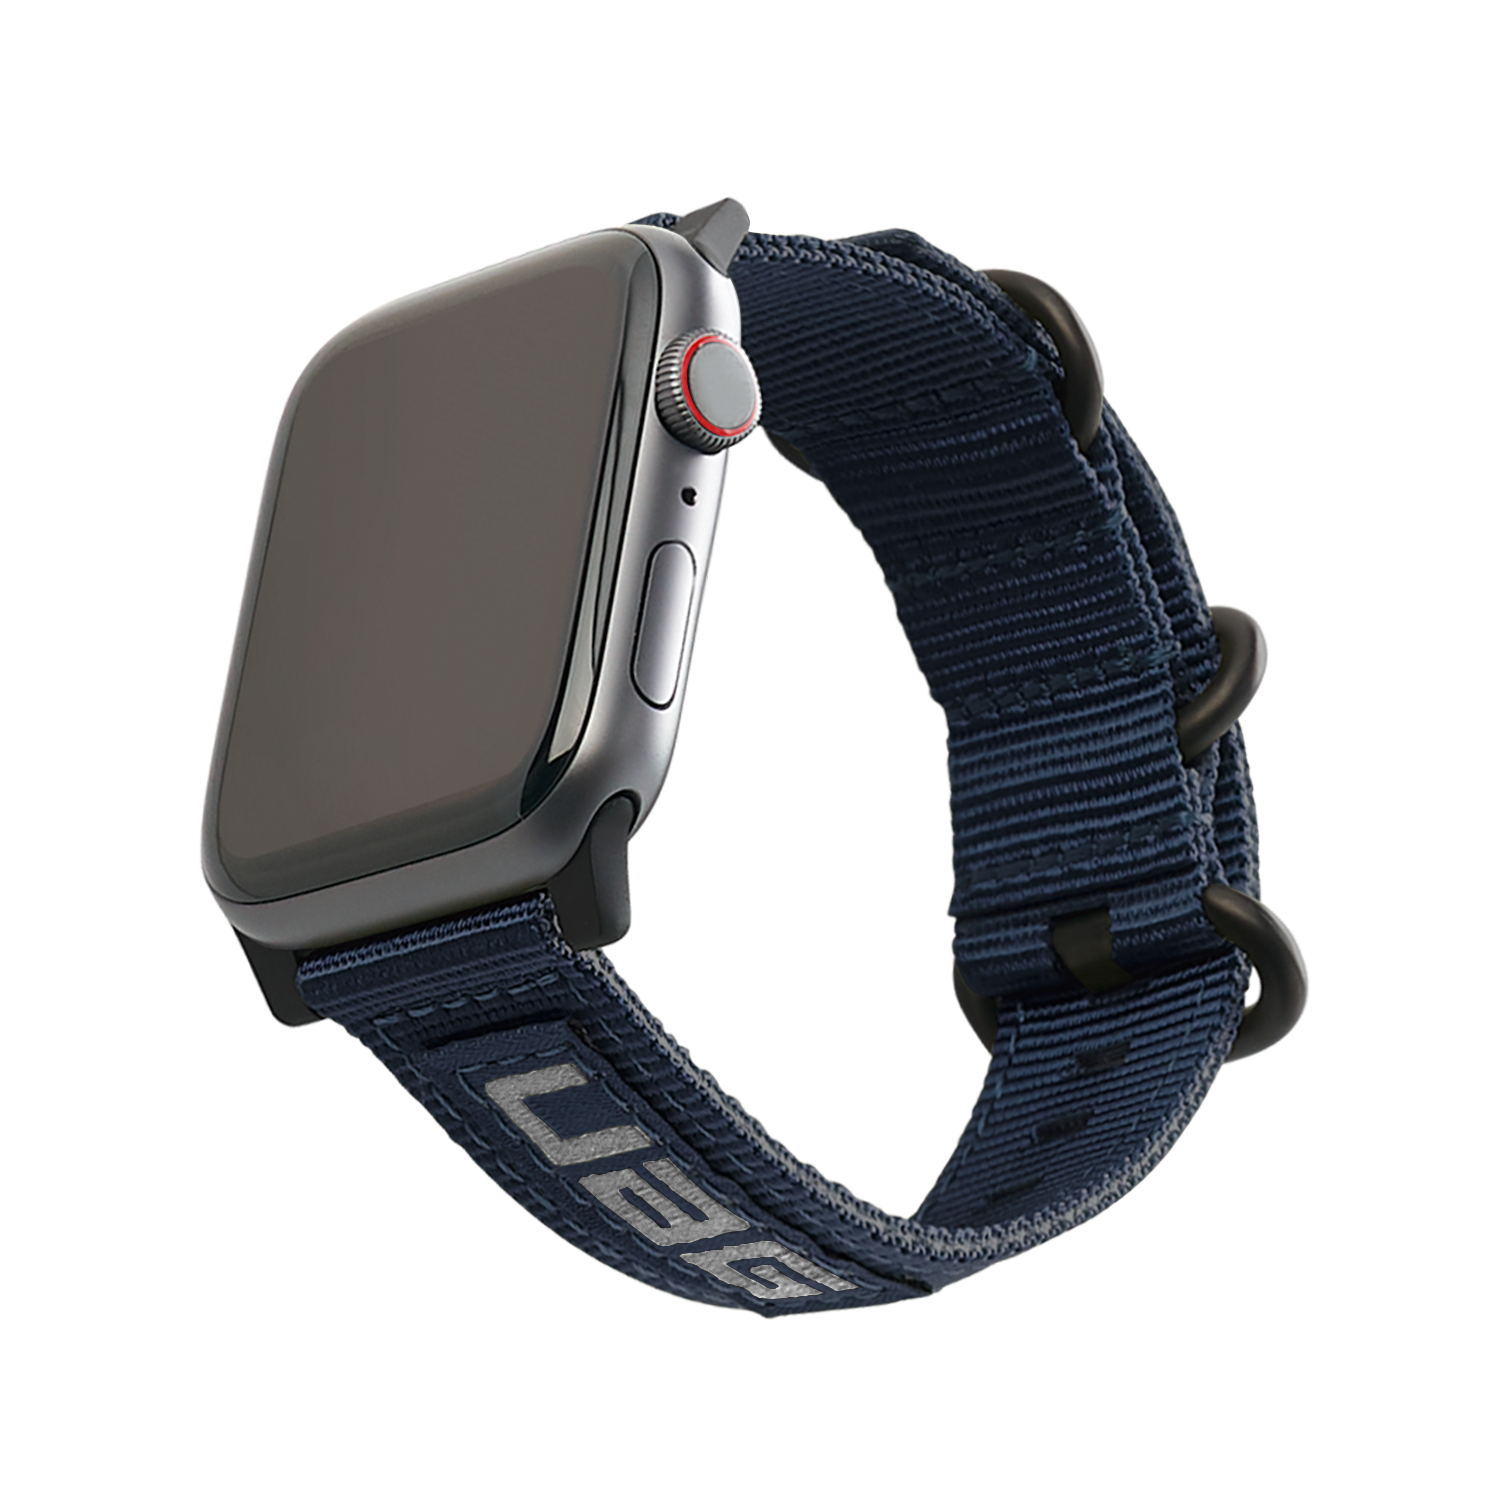 Nato Eco Strap Apple Watch 45mm Series 7, Mallard